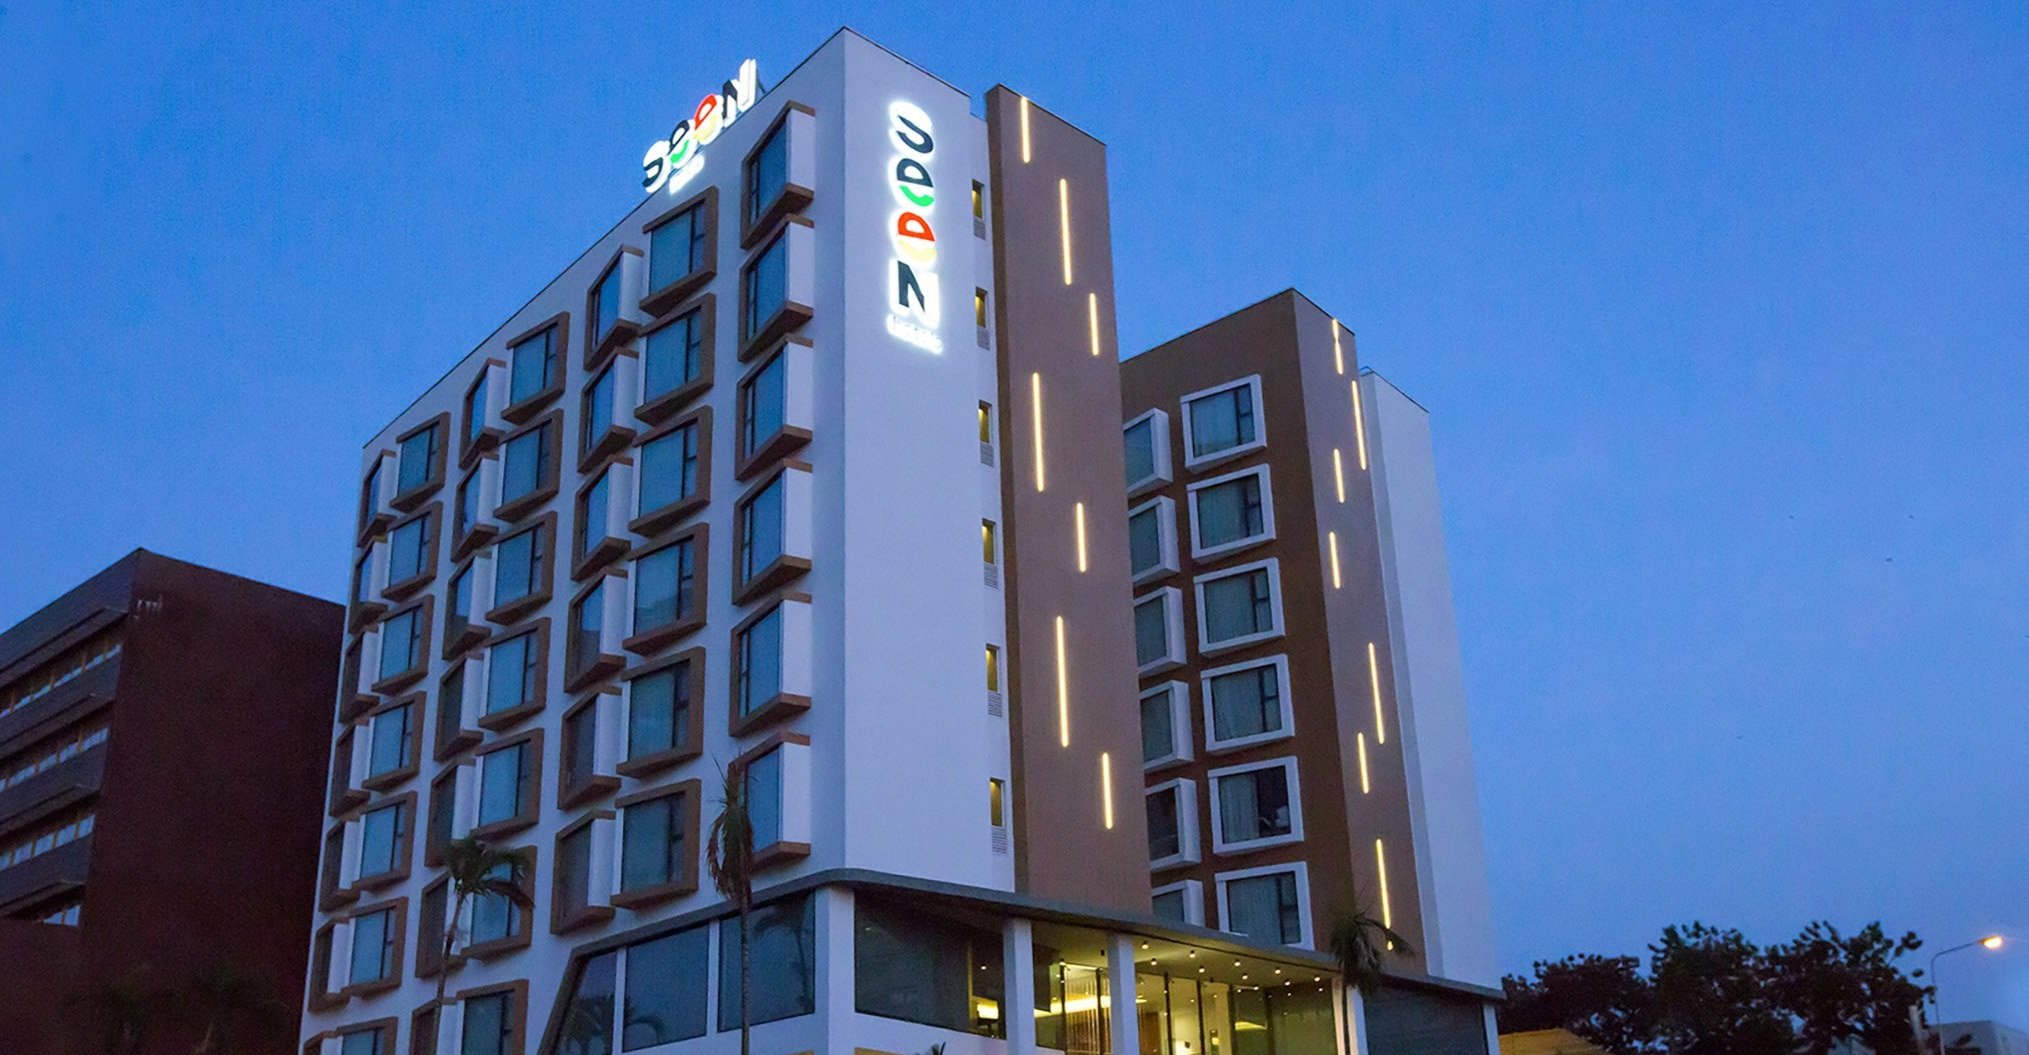 Seen Hotel Abidjan Plateau